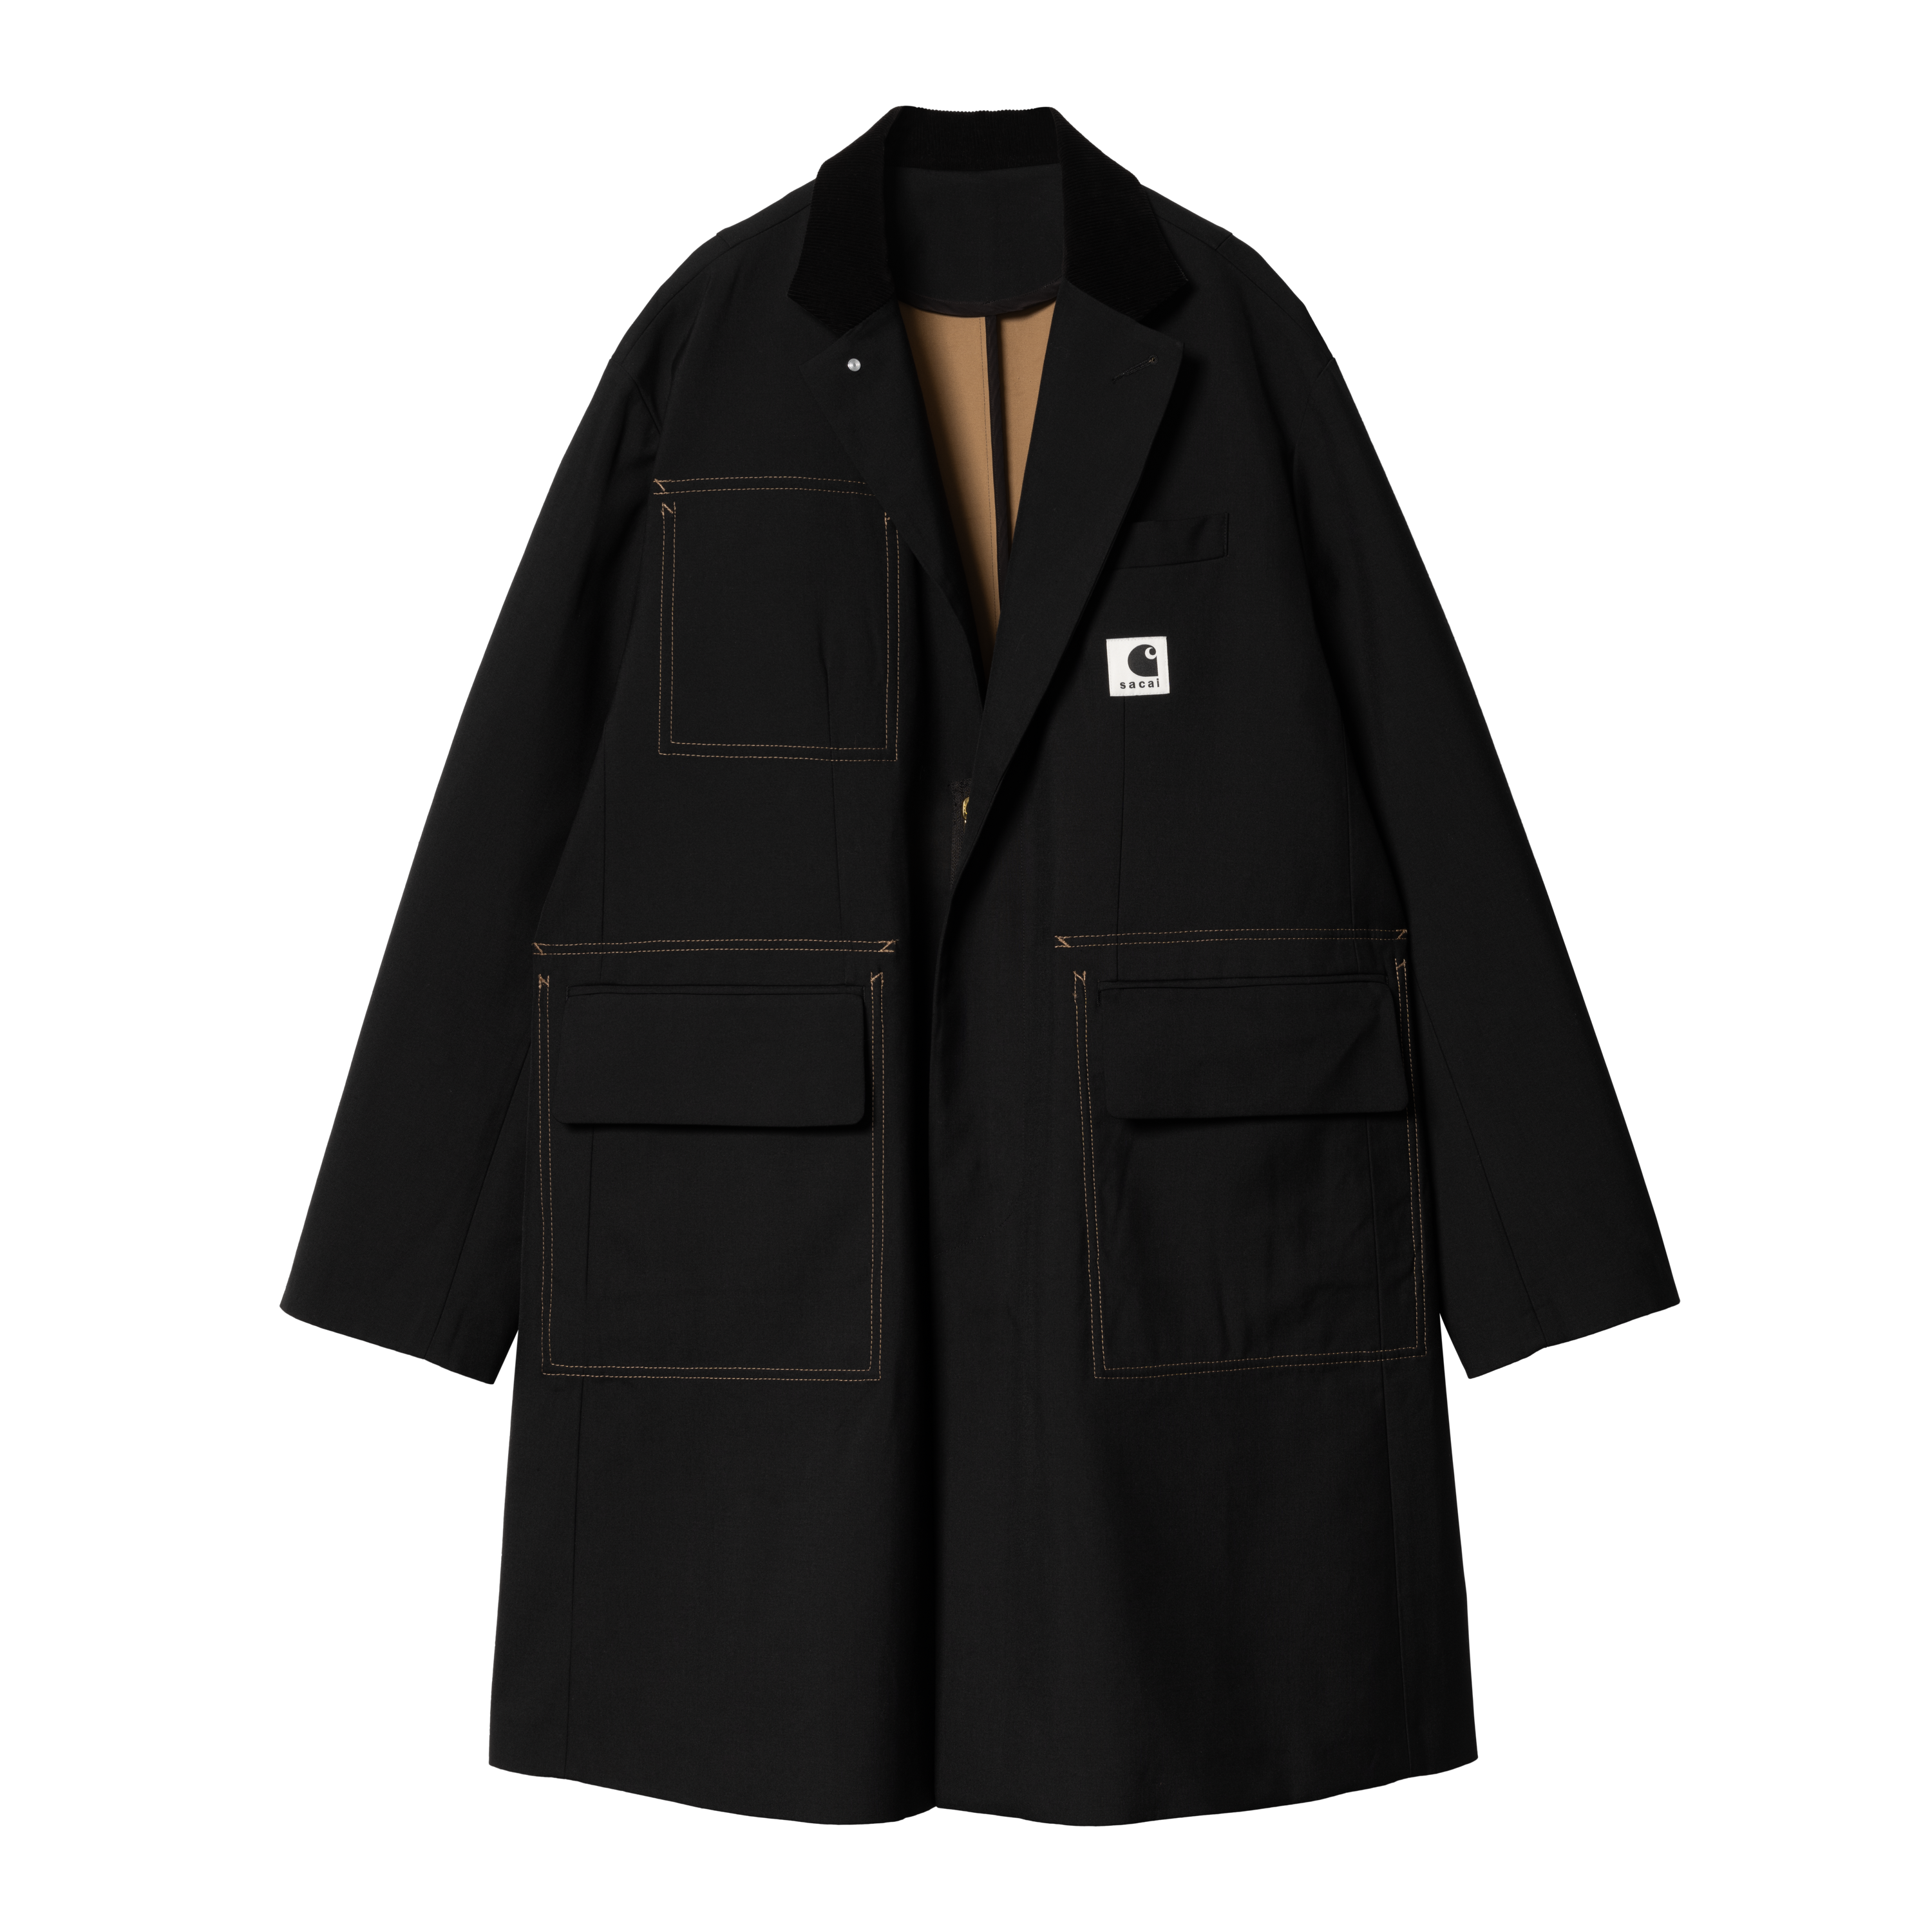 Carhartt WIP sacai x Carhartt WIP Suiting Bonding Coat in Black